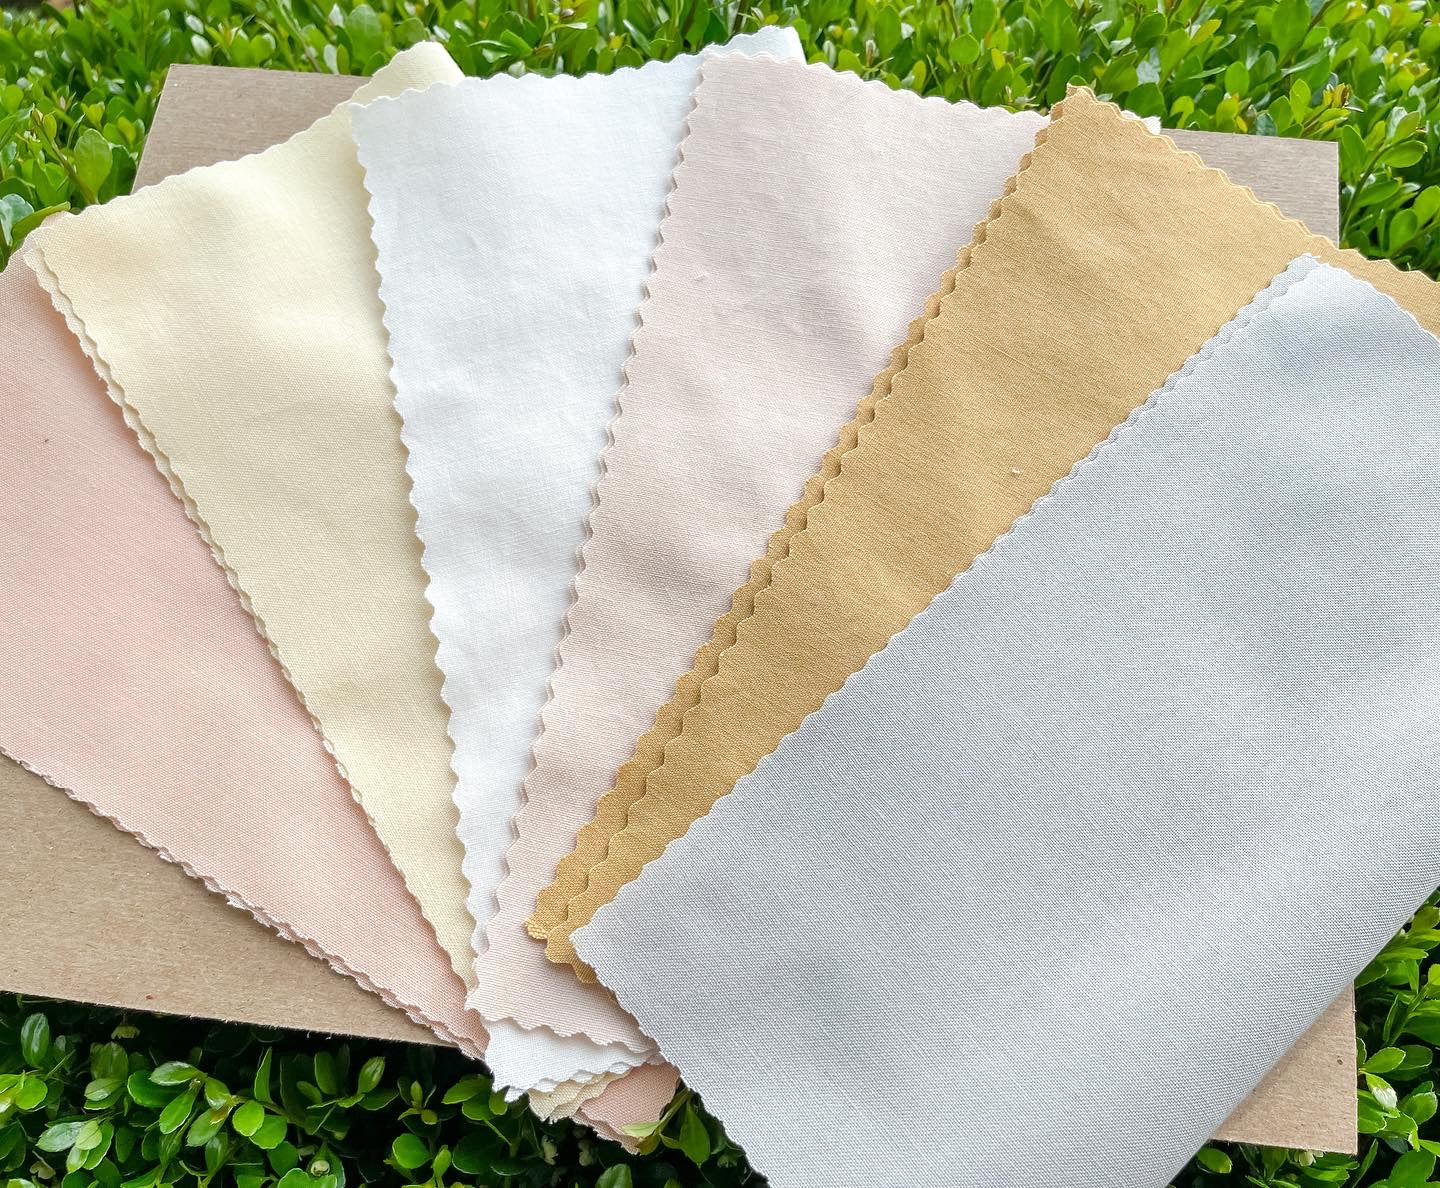 Embroidery Fabric Square Sample Packs - Kona Cotton Fabric, Linen Blend Fabric, Fabric Squares